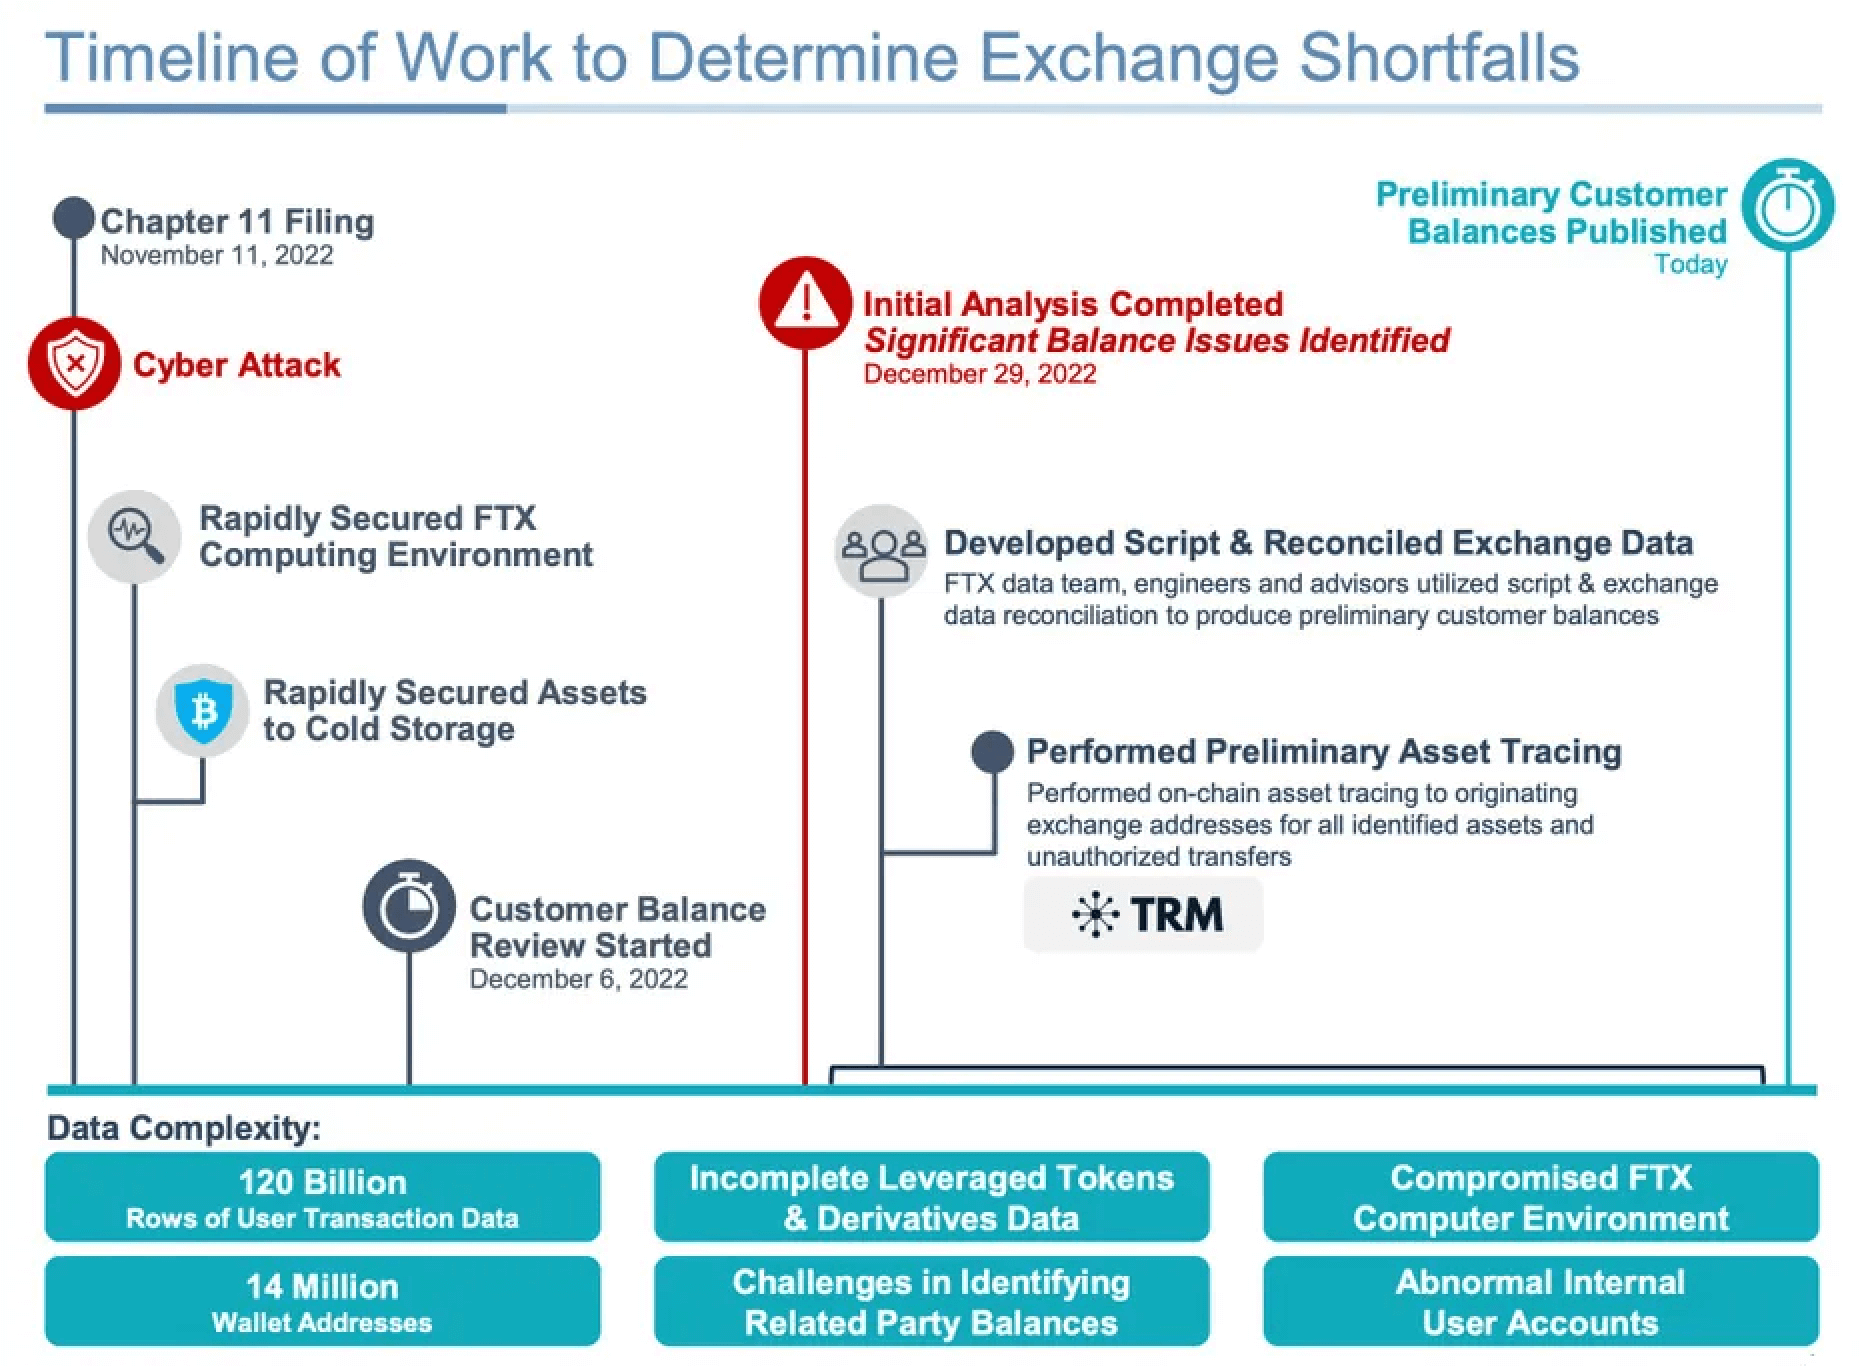 Timeline of work to deteremine exchange shortfalls